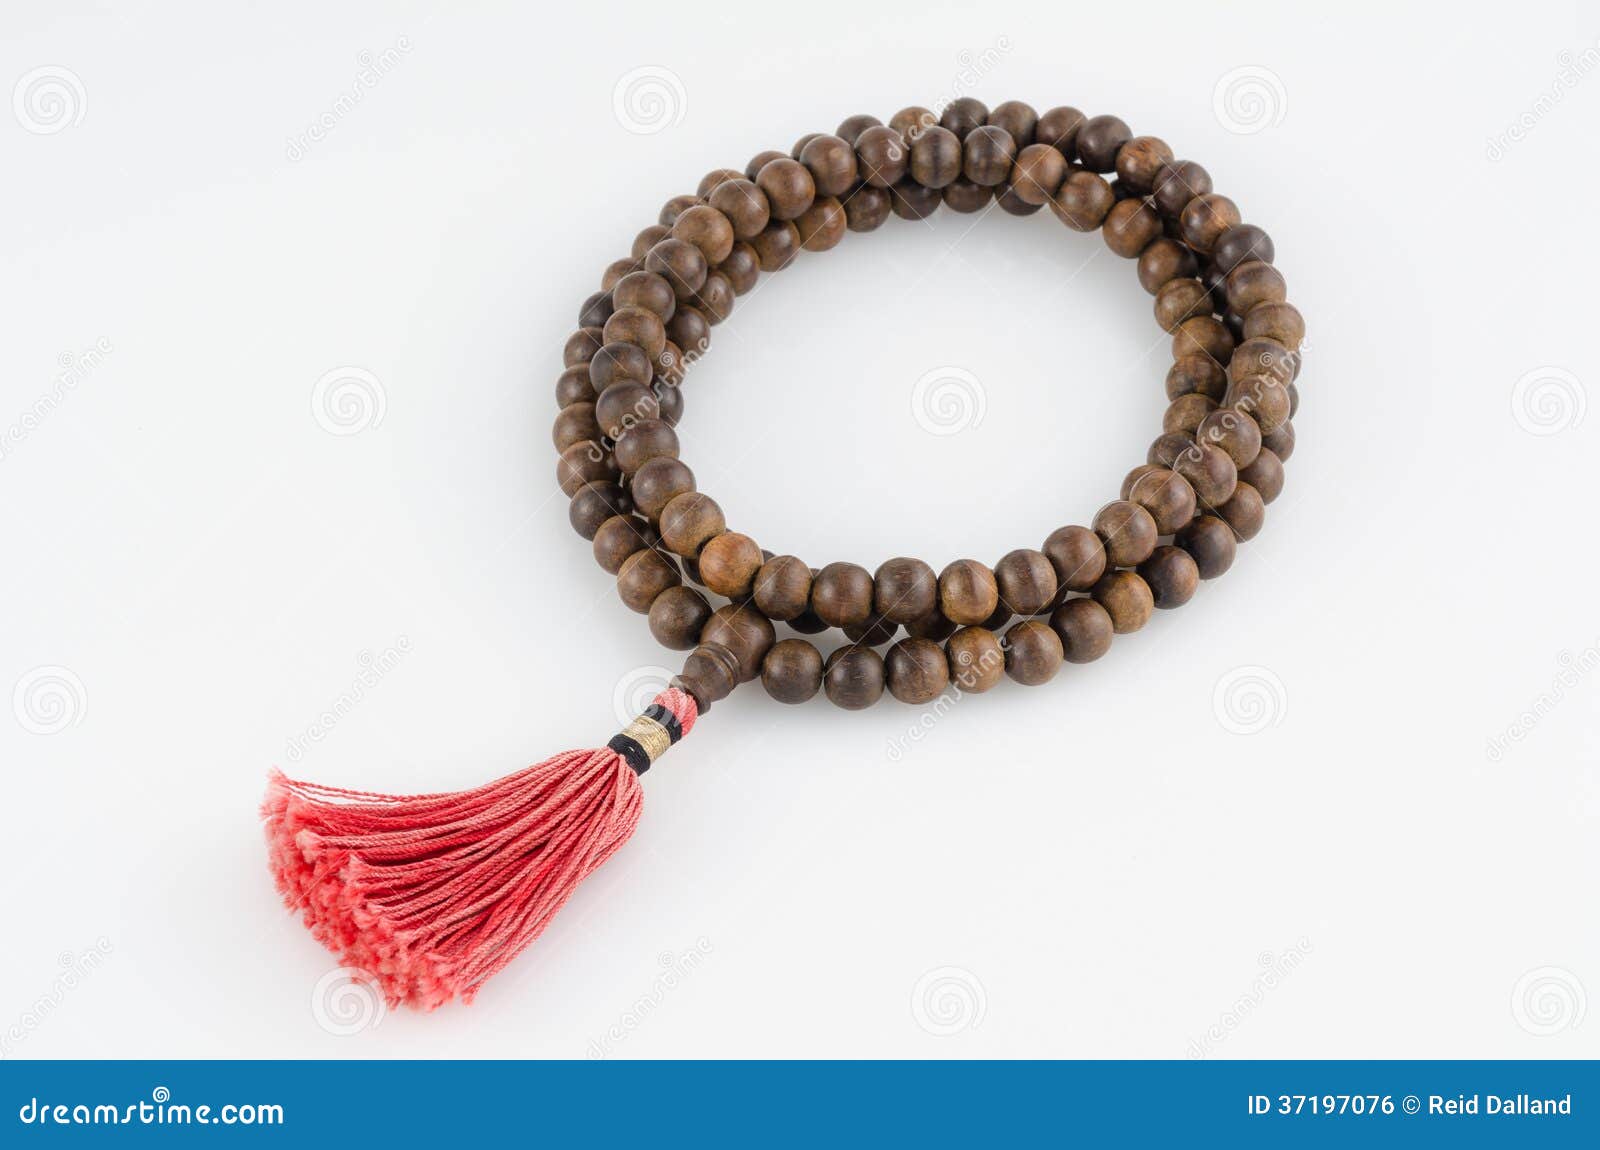 Mandala Crafts 108 Mala Prayer Beads Necklace, Bracelet from Natural Wood  for Buddhists, Meditation, Yoga (Verawood 7 Chakra) - Walmart.com